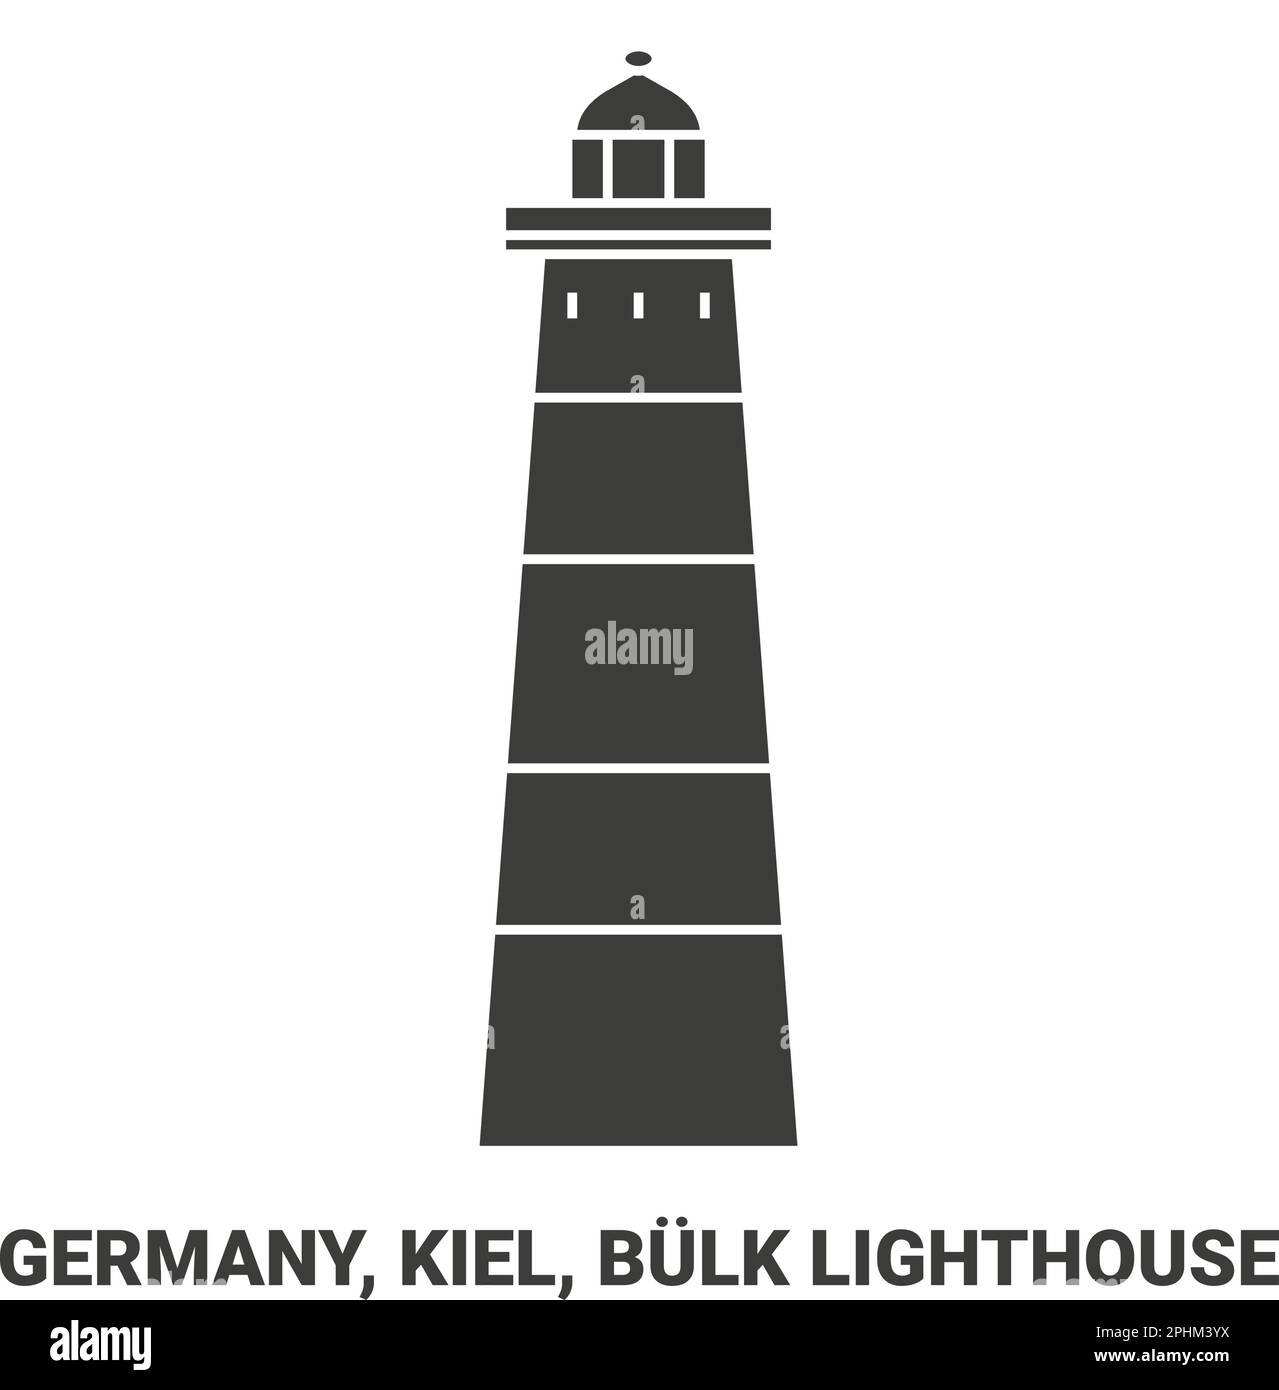 Deutschland, Kiel, Bulk Lighthouse Reiseziel Vektordarstellung Stock Vektor